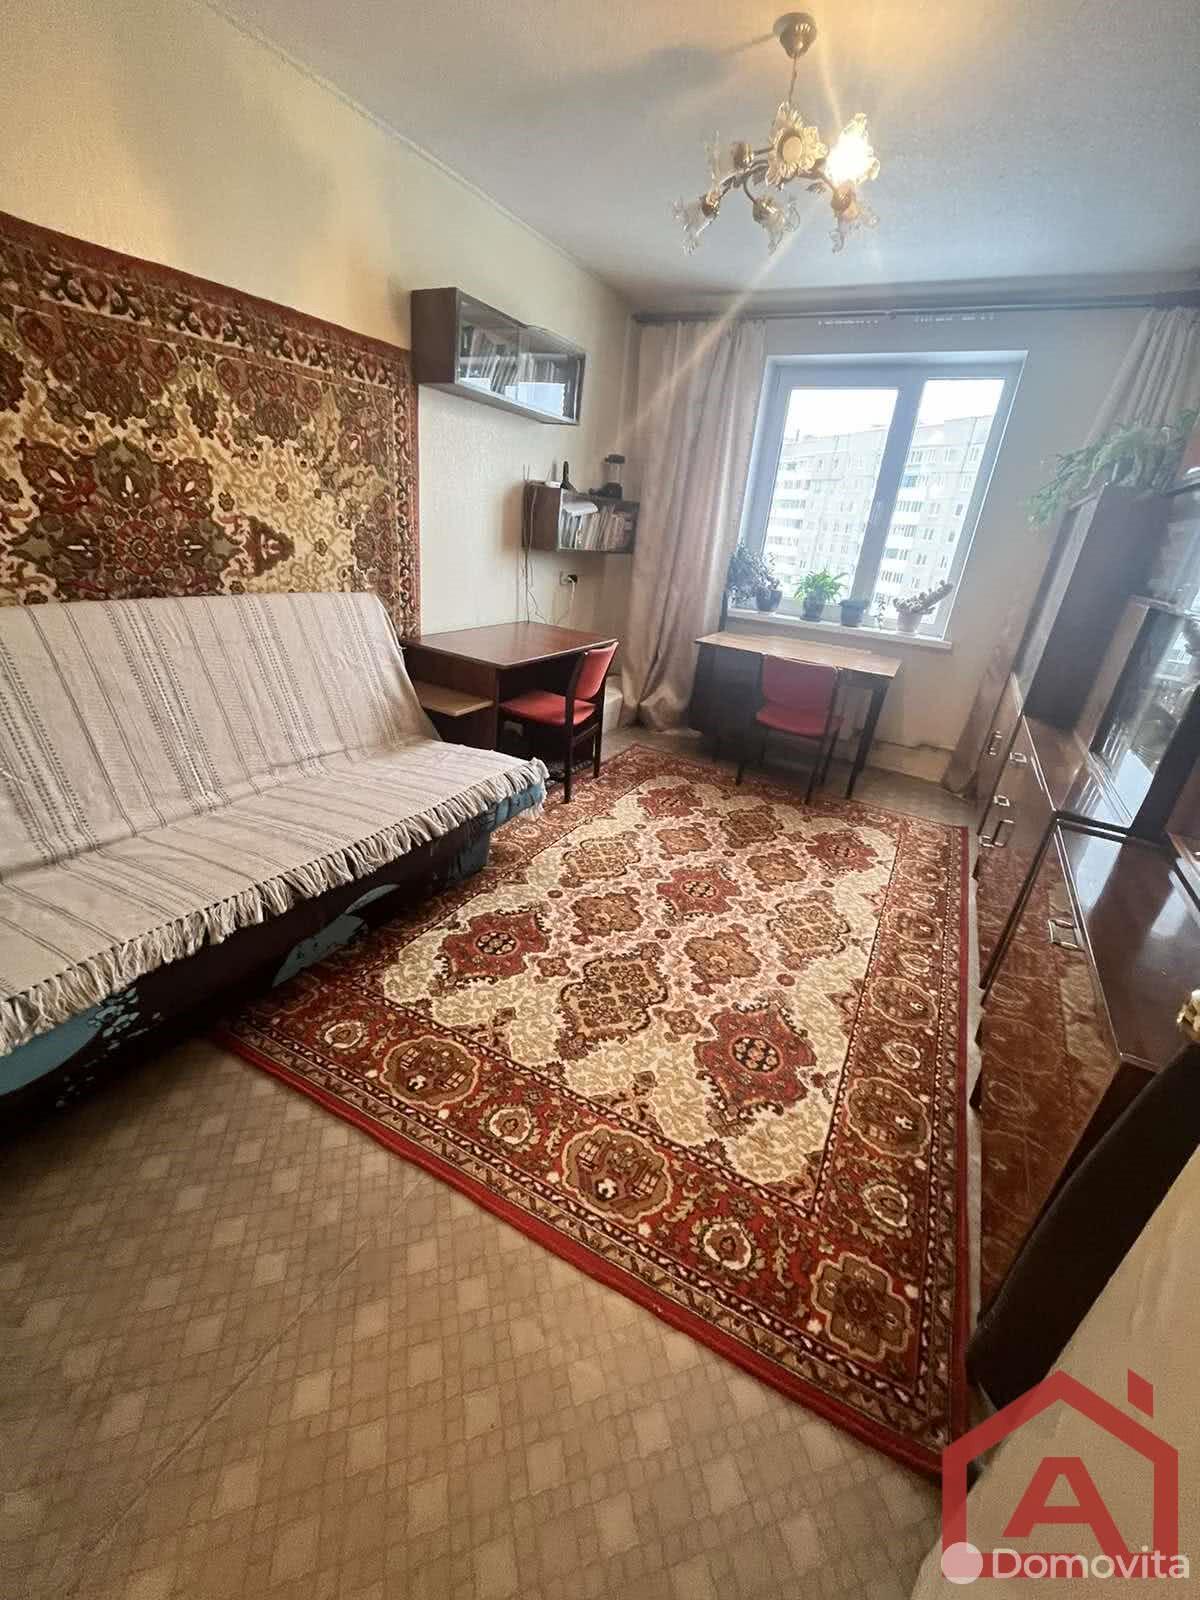 комната, Минск, ул. Громова, д. 46, стоимость продажи 58 581 р.